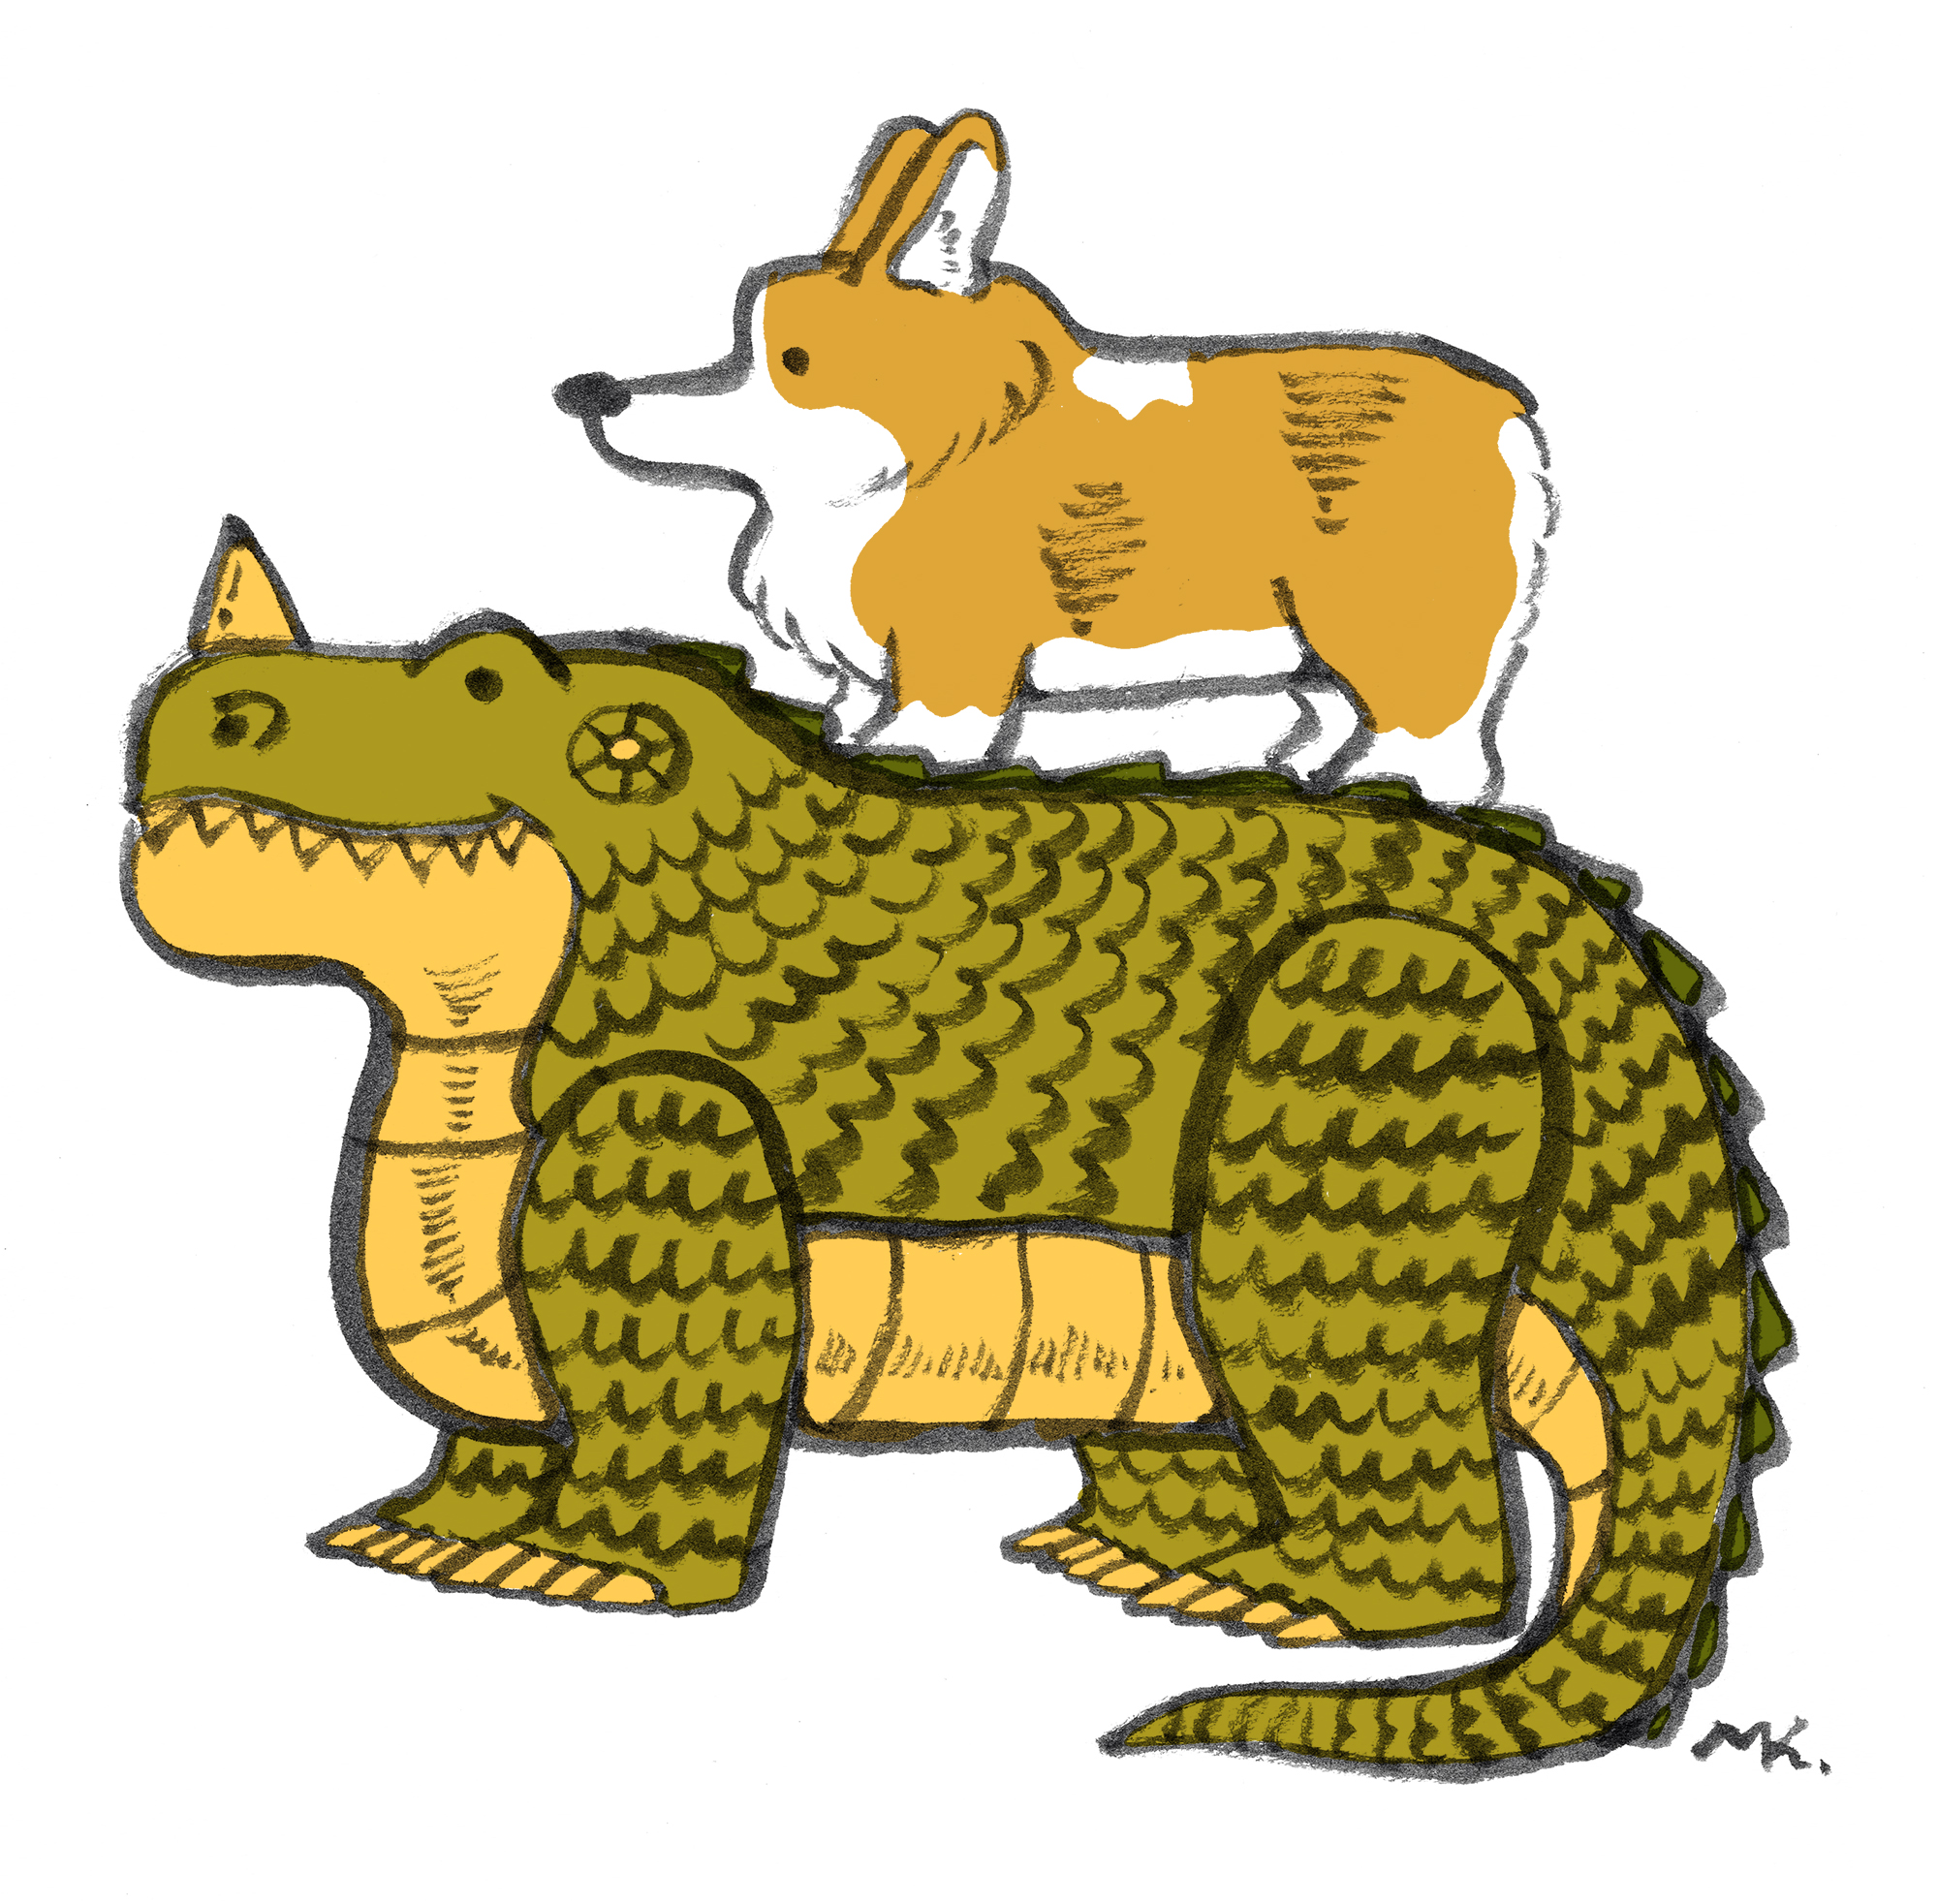 Early Iguanodon and Corgi